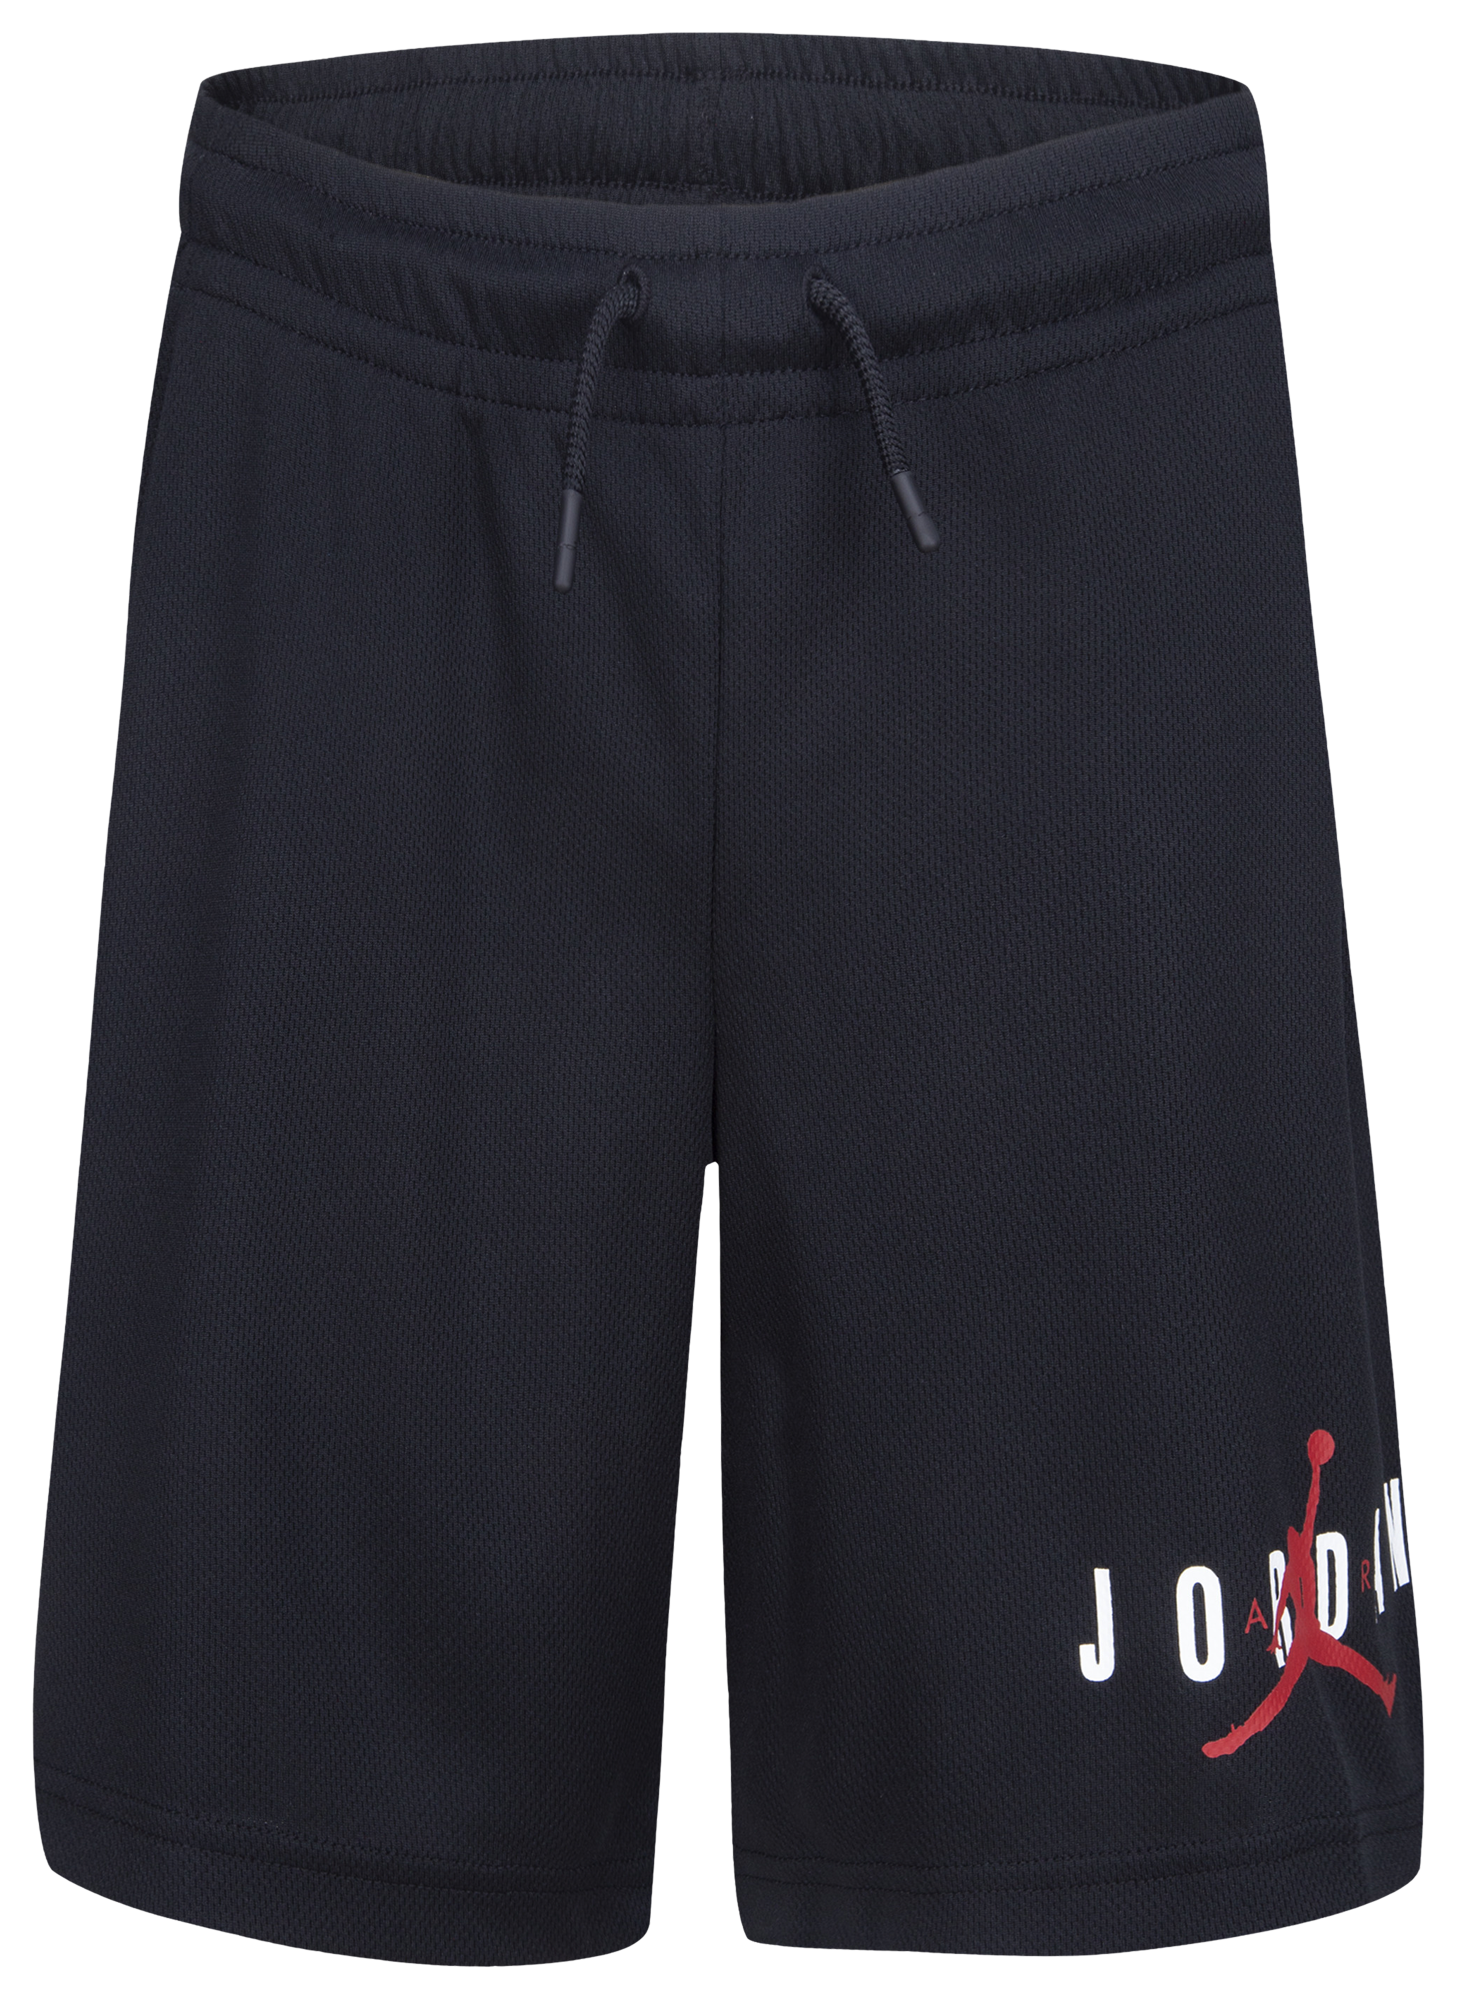 Jordan Essentials Graphic Mesh Shorts - Boys' Grade School